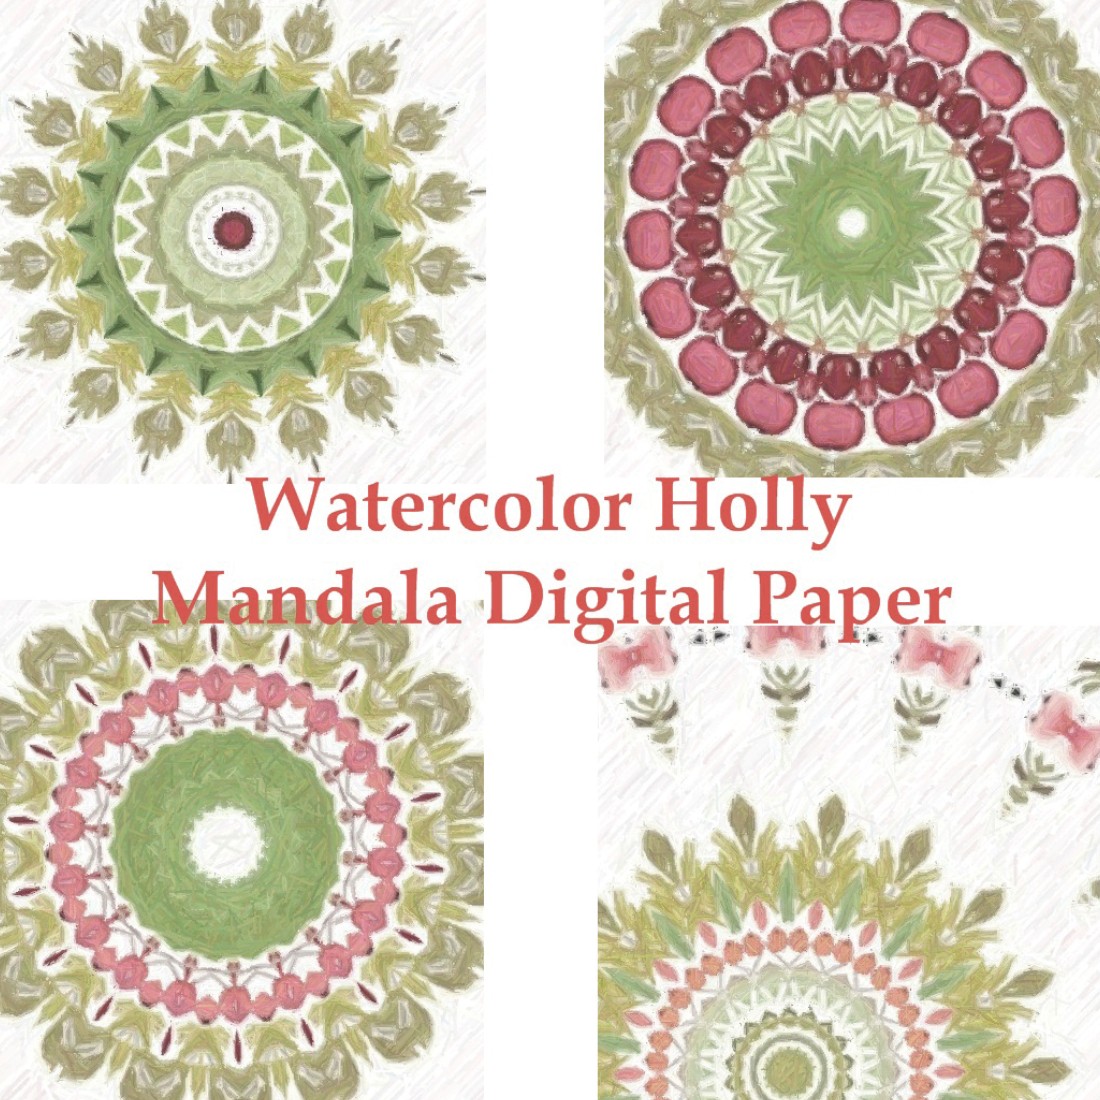 Mandala Holly Digital Paper Design cover image.